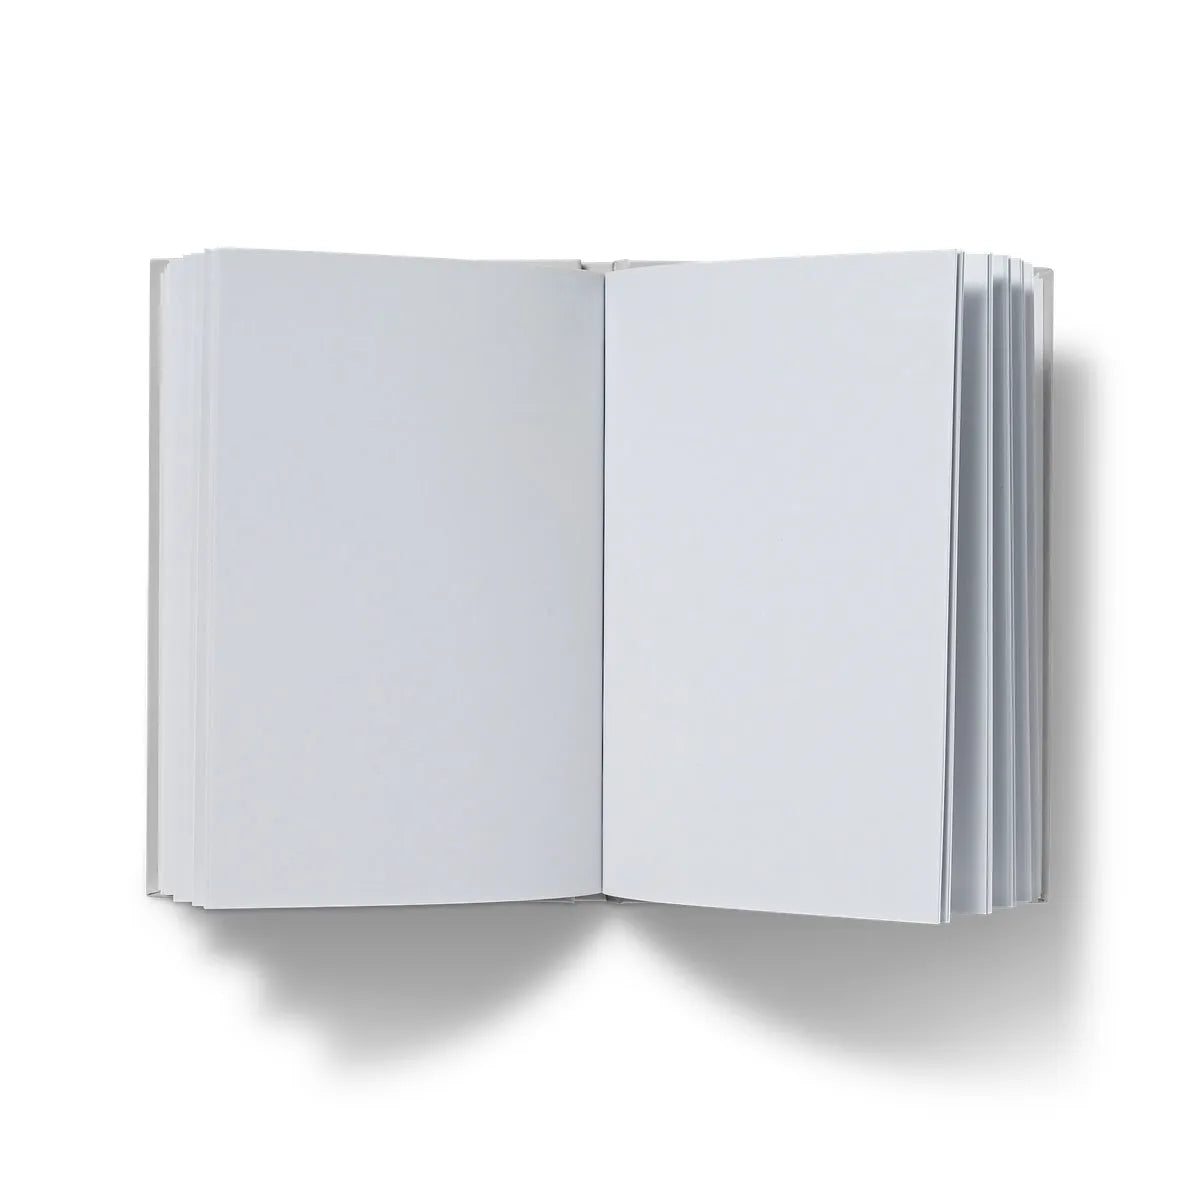 Man’s Best Friend Hardback Journal - Notebooks & Notepads - Aesthetic Art